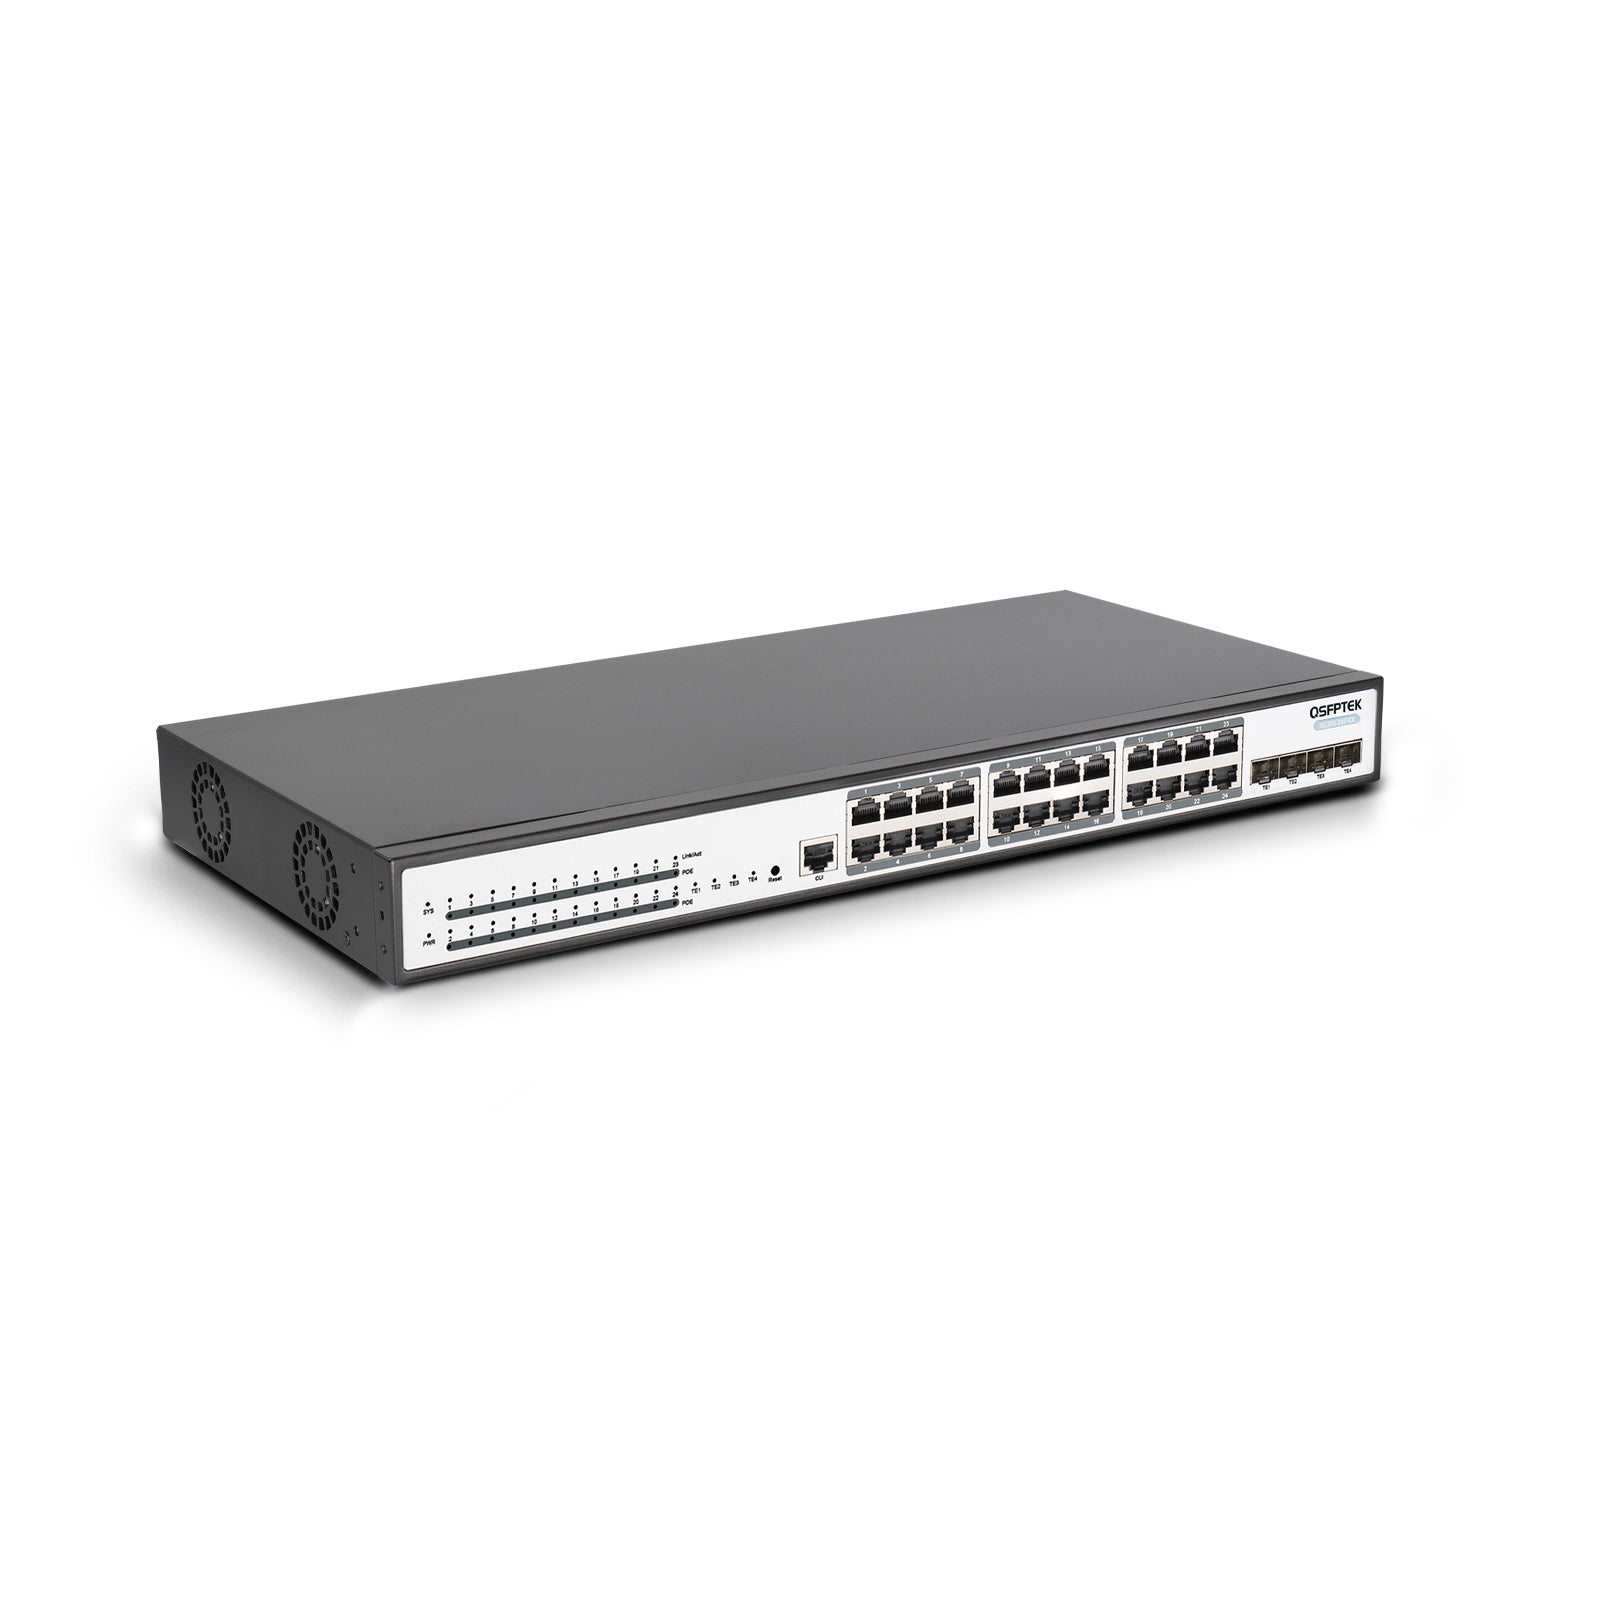 S5300-24P4X, 24-Port Ethernet L2+ PoE+ Switch, 24x PoE+ Ports@370W with 4x 10GE SFP+ Uplinks, Stackable Switch